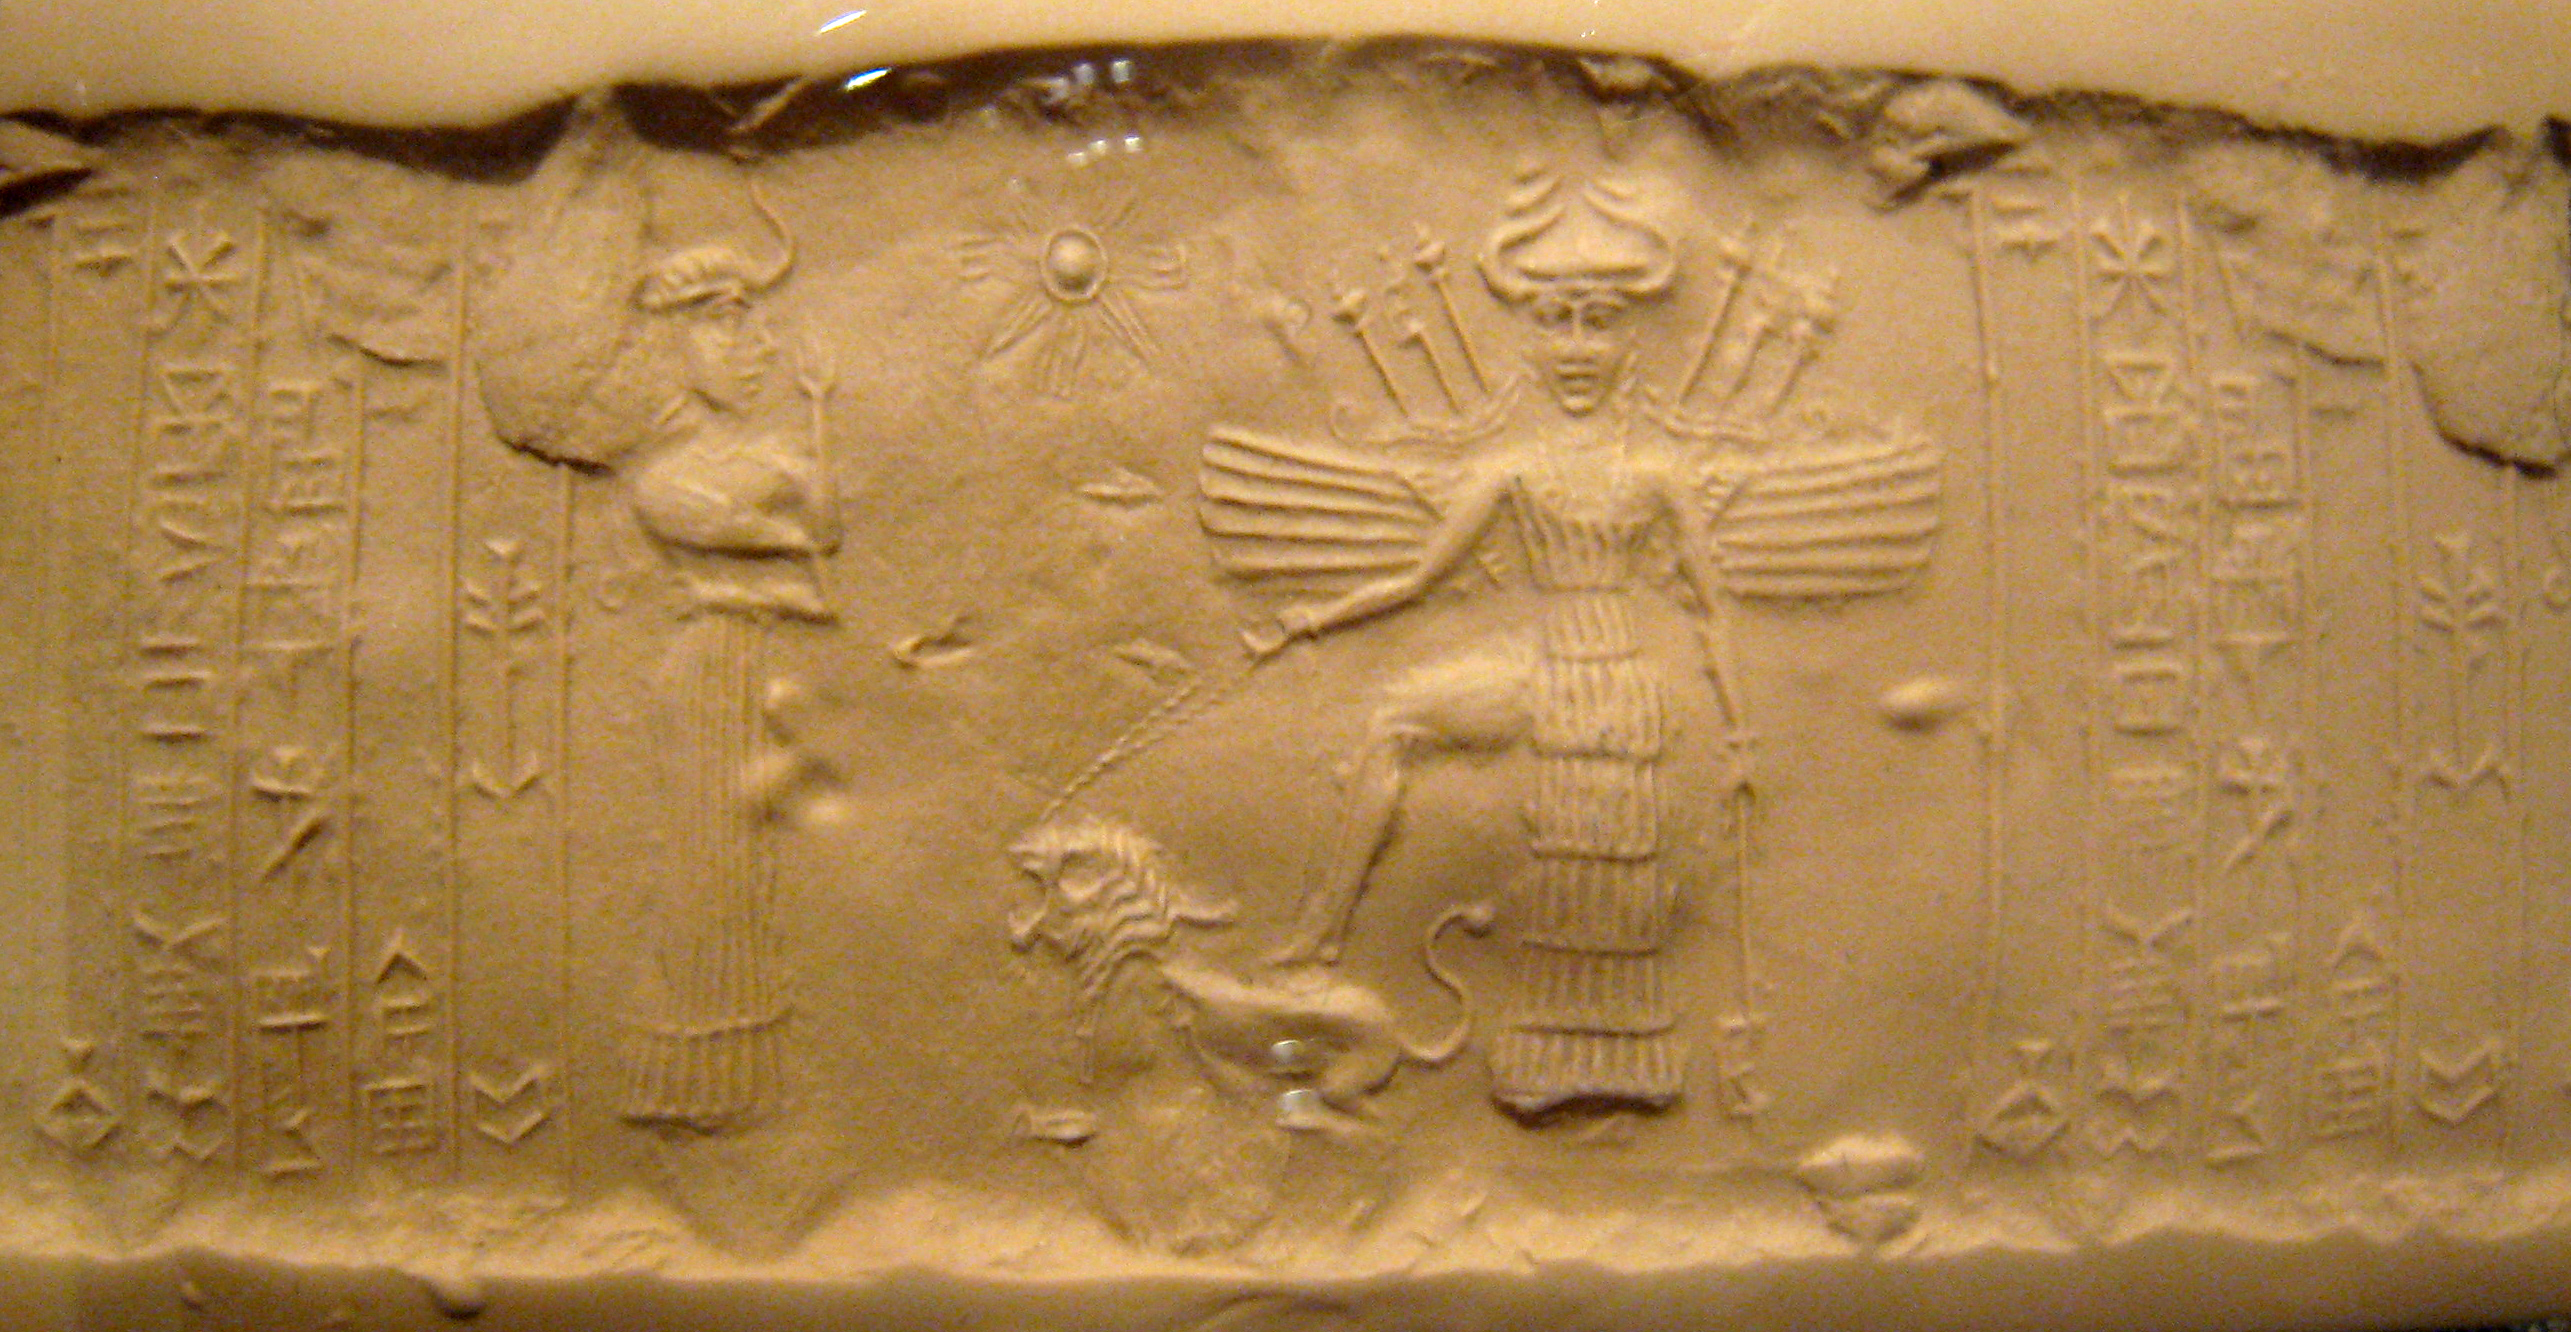 12 - Ninshubur & Ishtar-Inanna atop lion - Leo